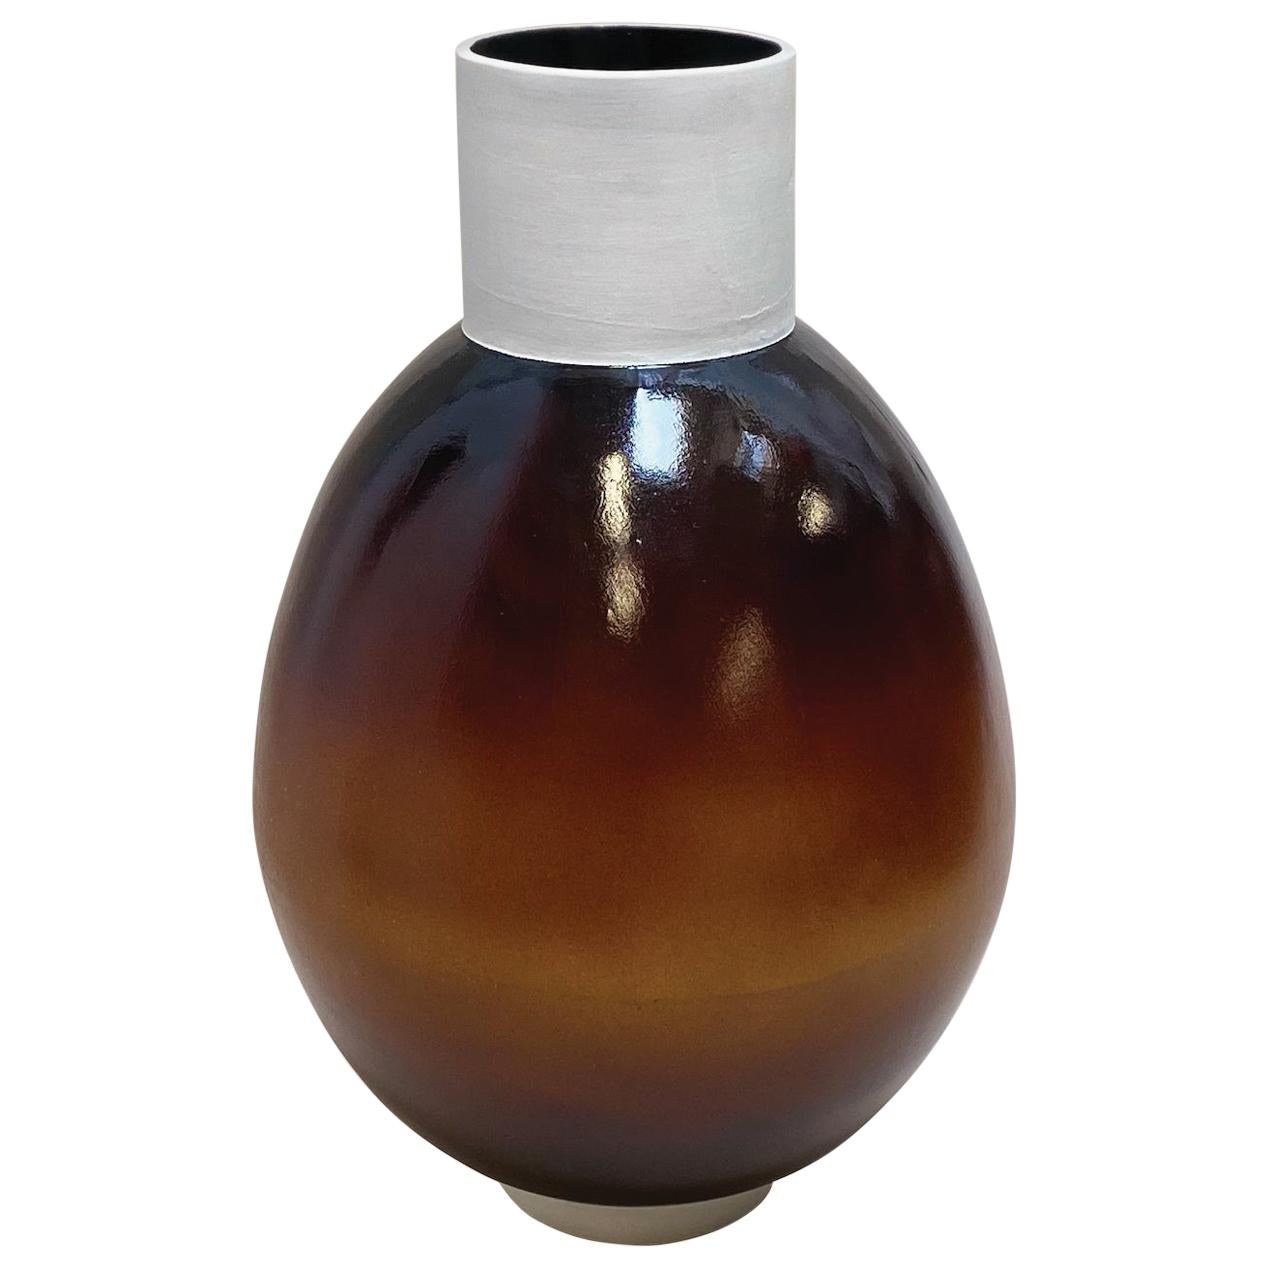 Ott Another Paradigmatic Handmade Ceramic Vase by Studio Yoon Seok-Hyeon For Sale